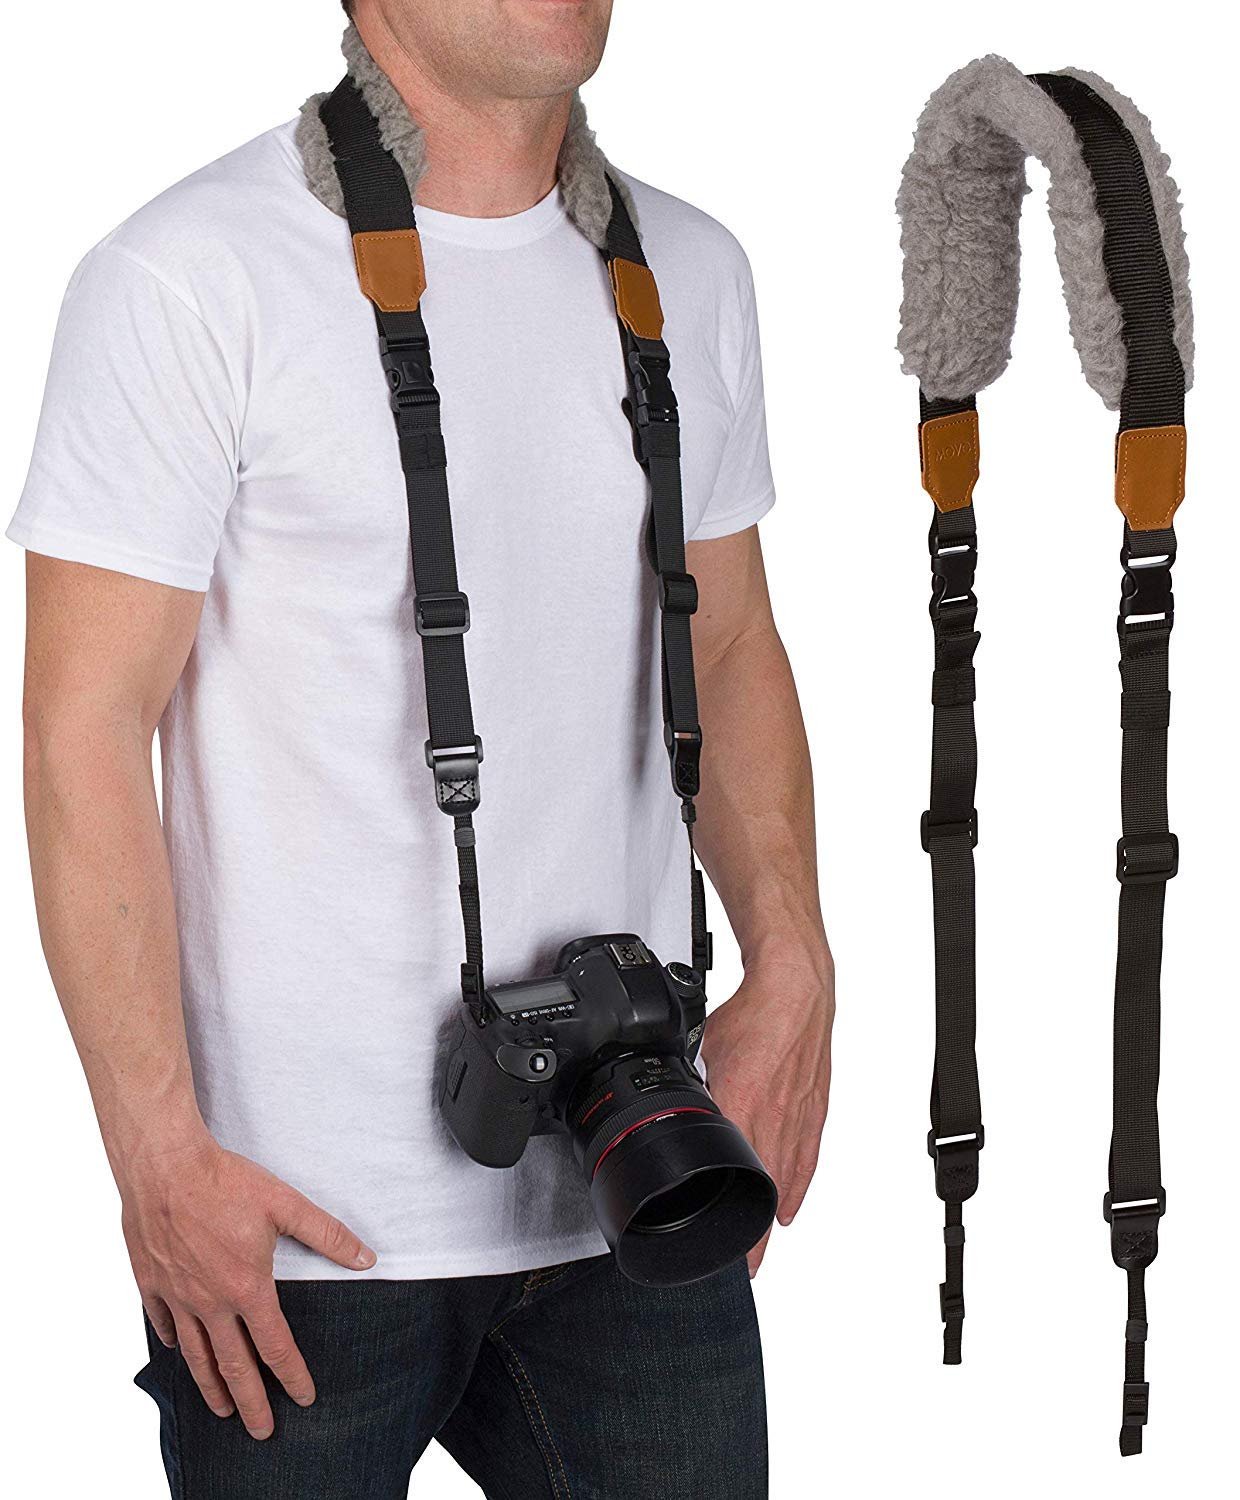 Movo MP-SS8 DSLR Camera Strap - Quick Release Sheepskin Neck Sling Shoulder Harness, Wrist Strap for Binoculars and Cameras